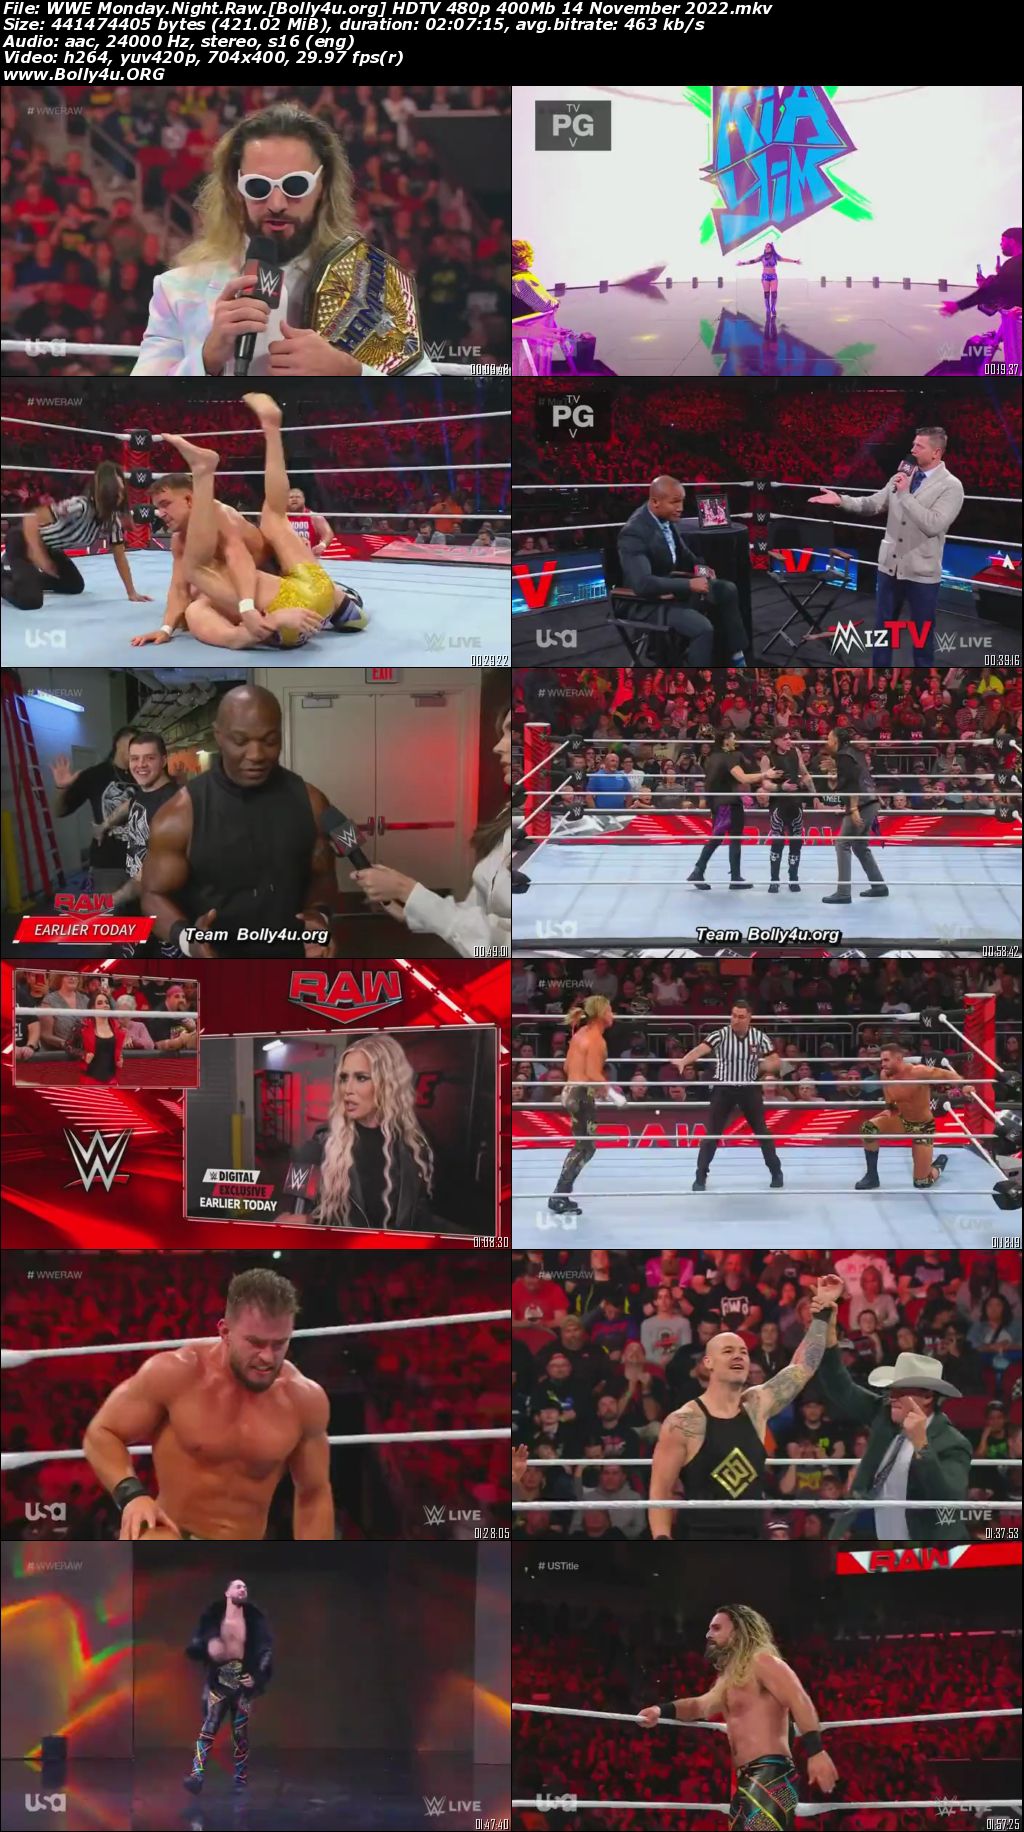 WWE Monday Night Raw HDTV 480p 400Mb 14 November 2022 Download